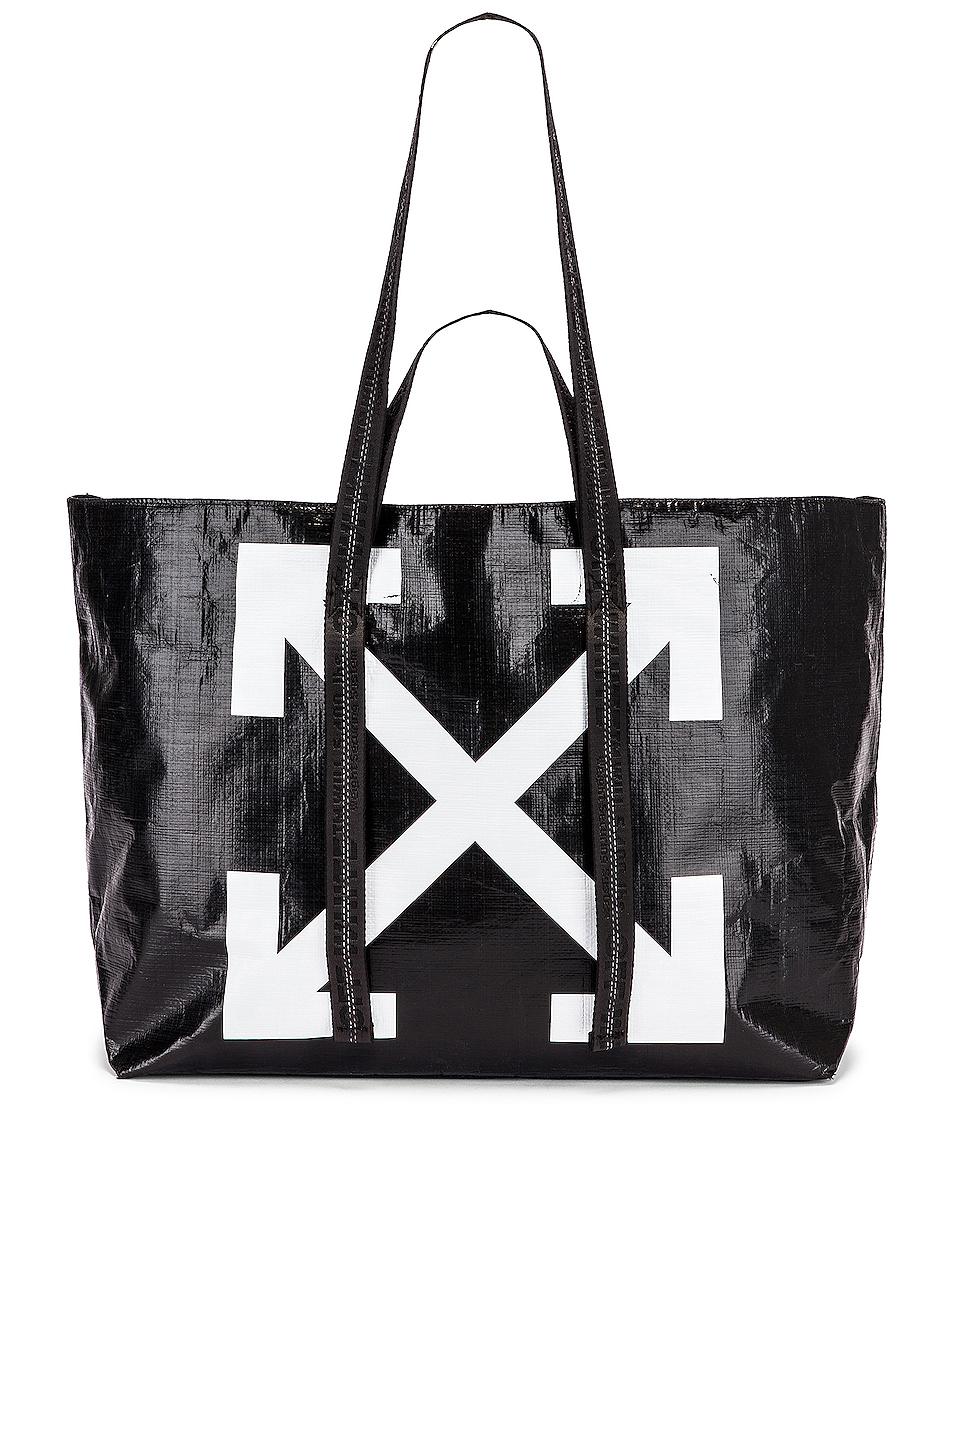 Off-White c/o Virgil Abloh New Commercial Tote Bag in Black & White (Black)  | Lyst